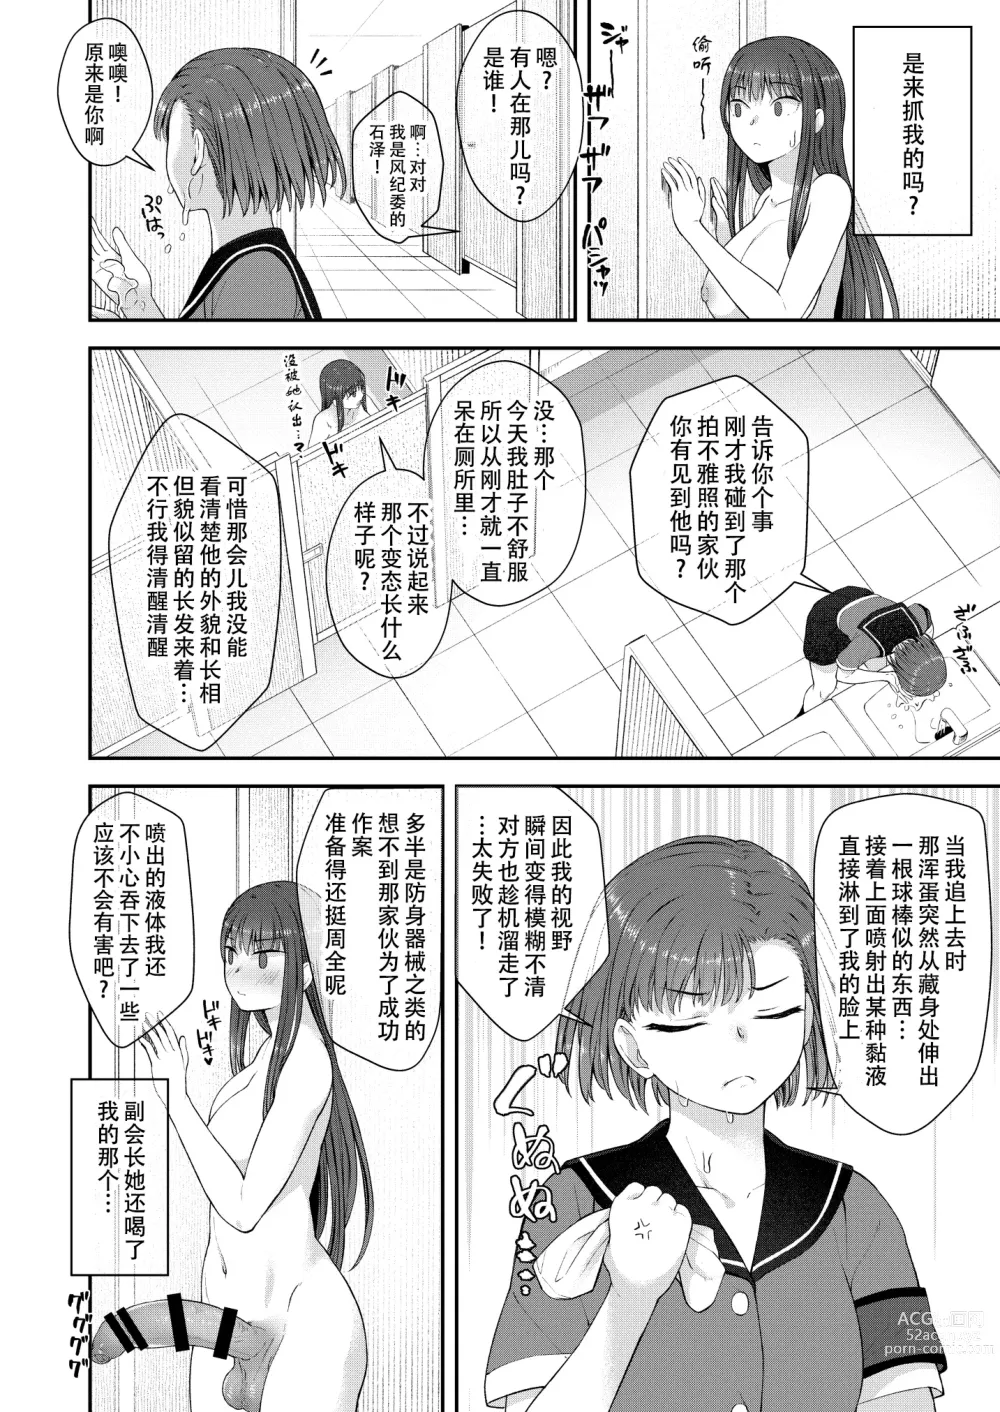 Page 26 of doujinshi 放课后的自拍少女2 那个露出男性性器并且自拍的变态只有她知道其真面目.